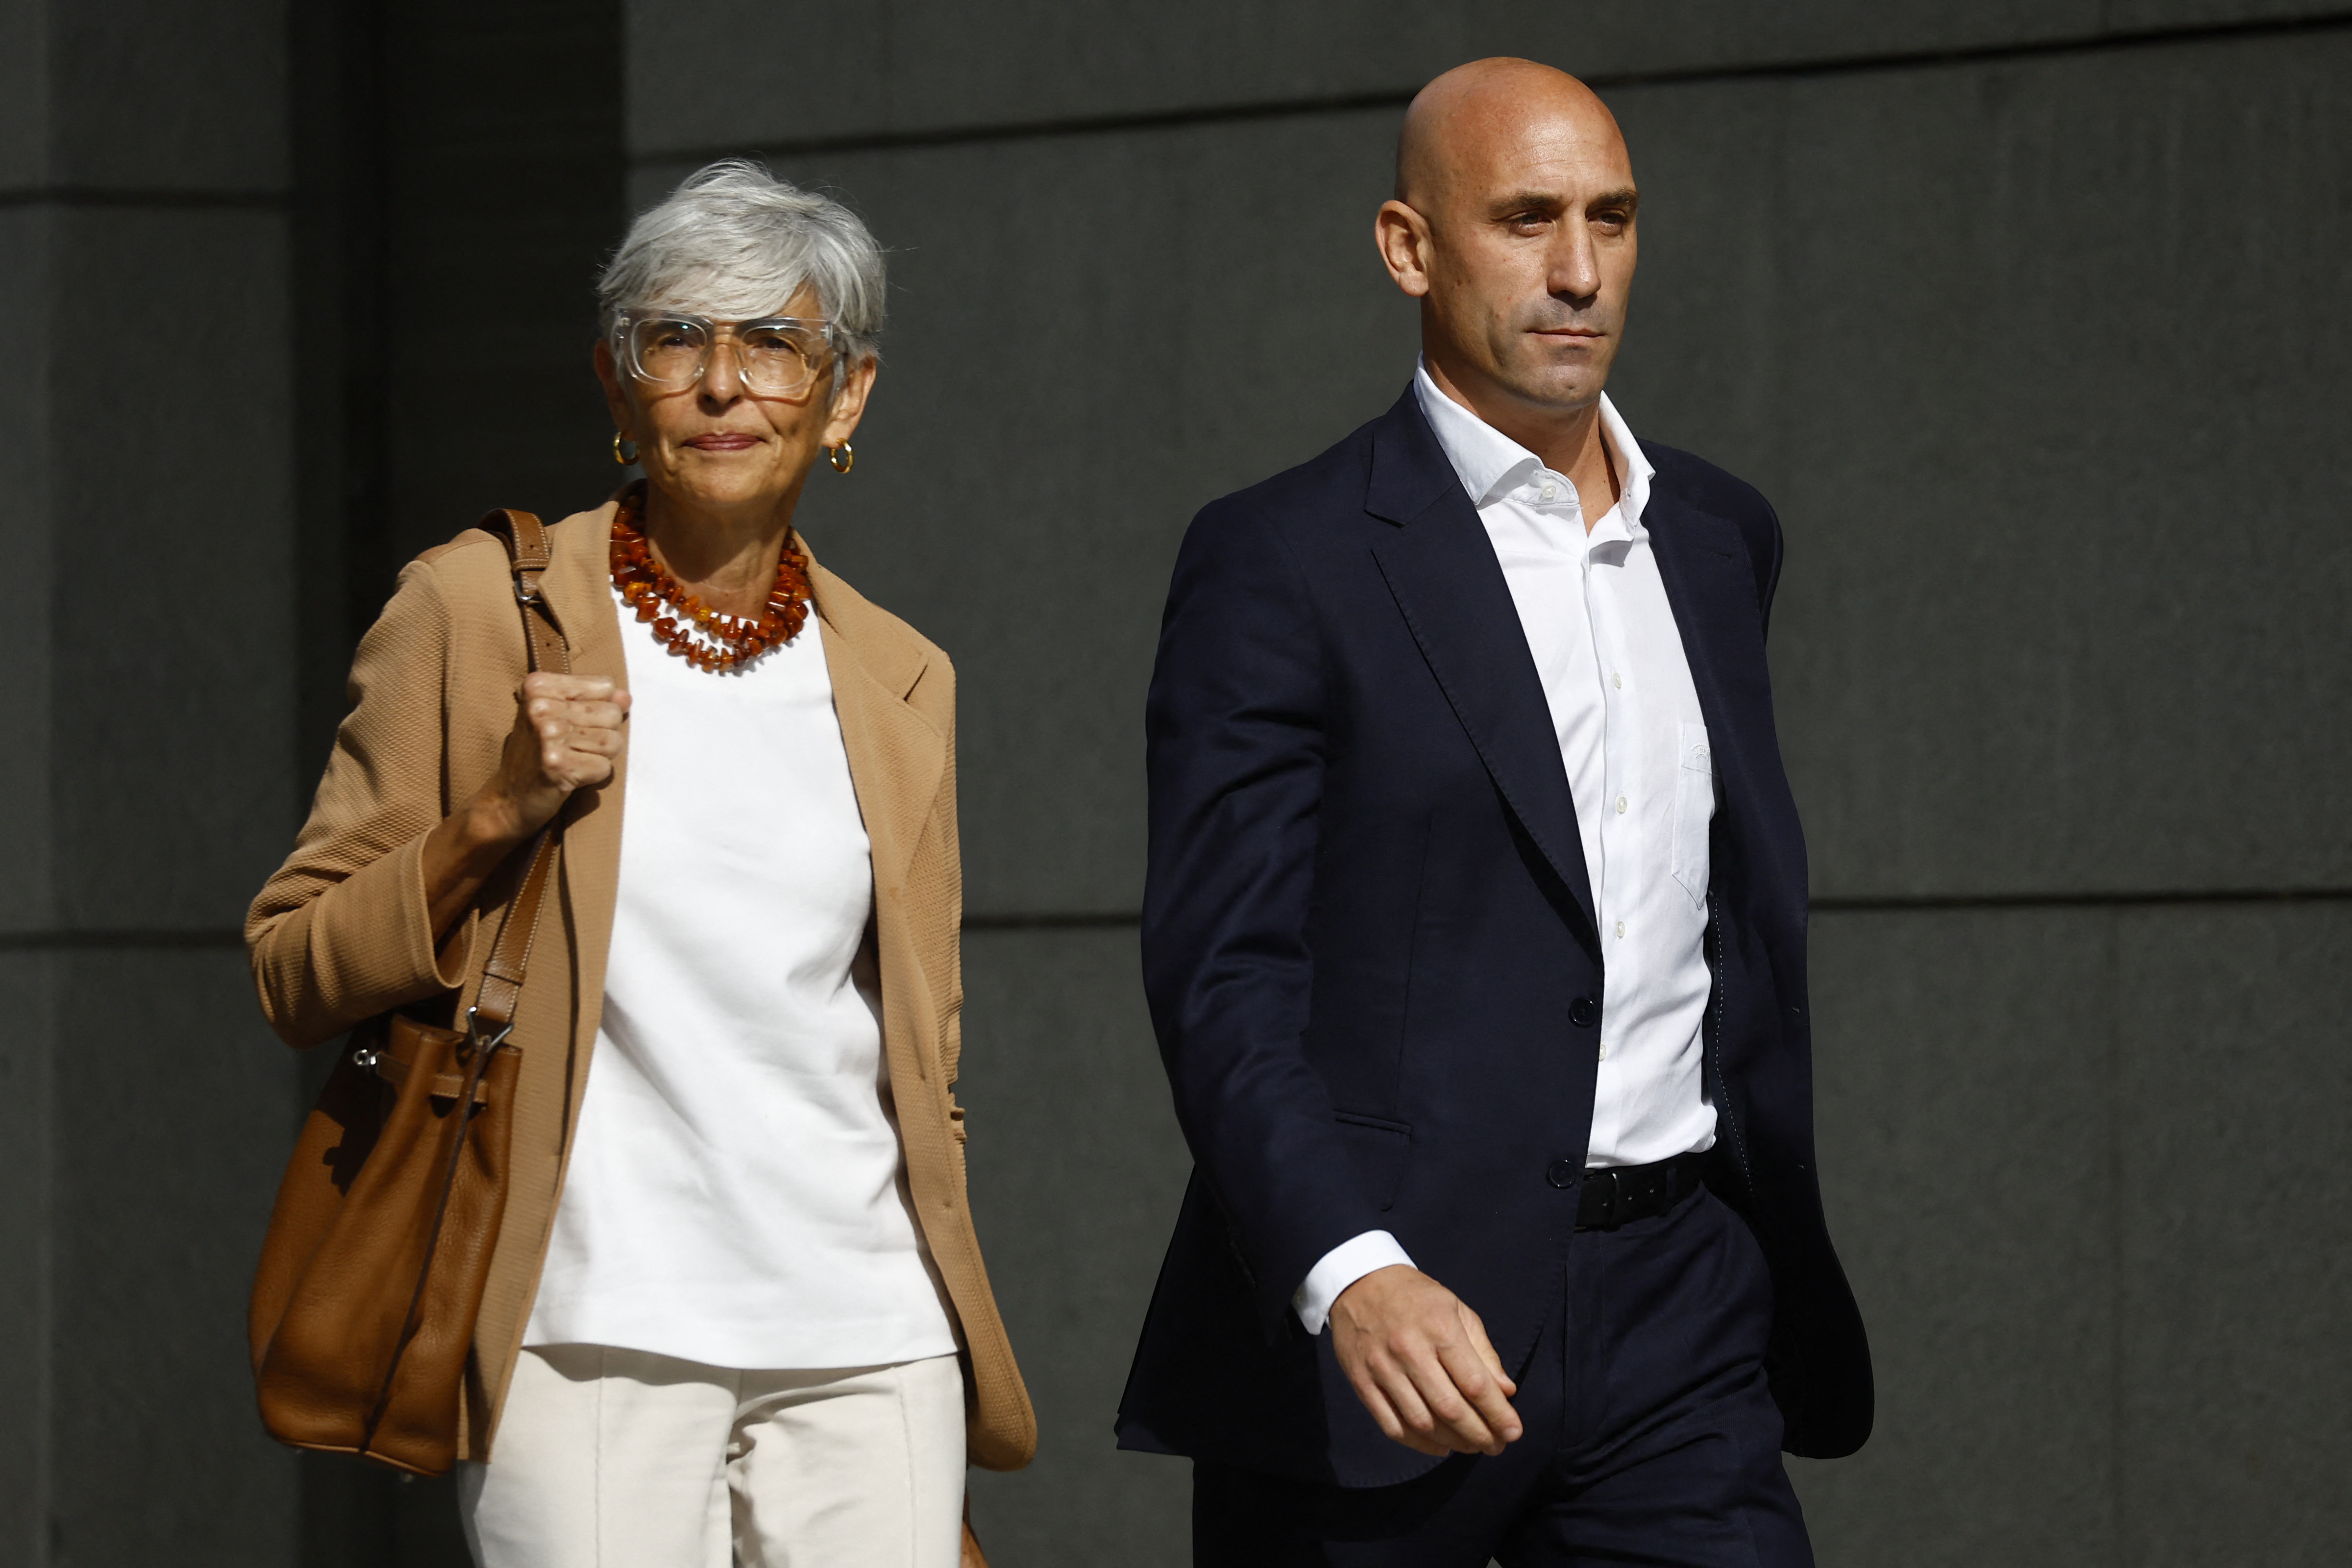 Restraining order imposed on ex-Spain soccer boss as he testifies in assault probe Reuters image